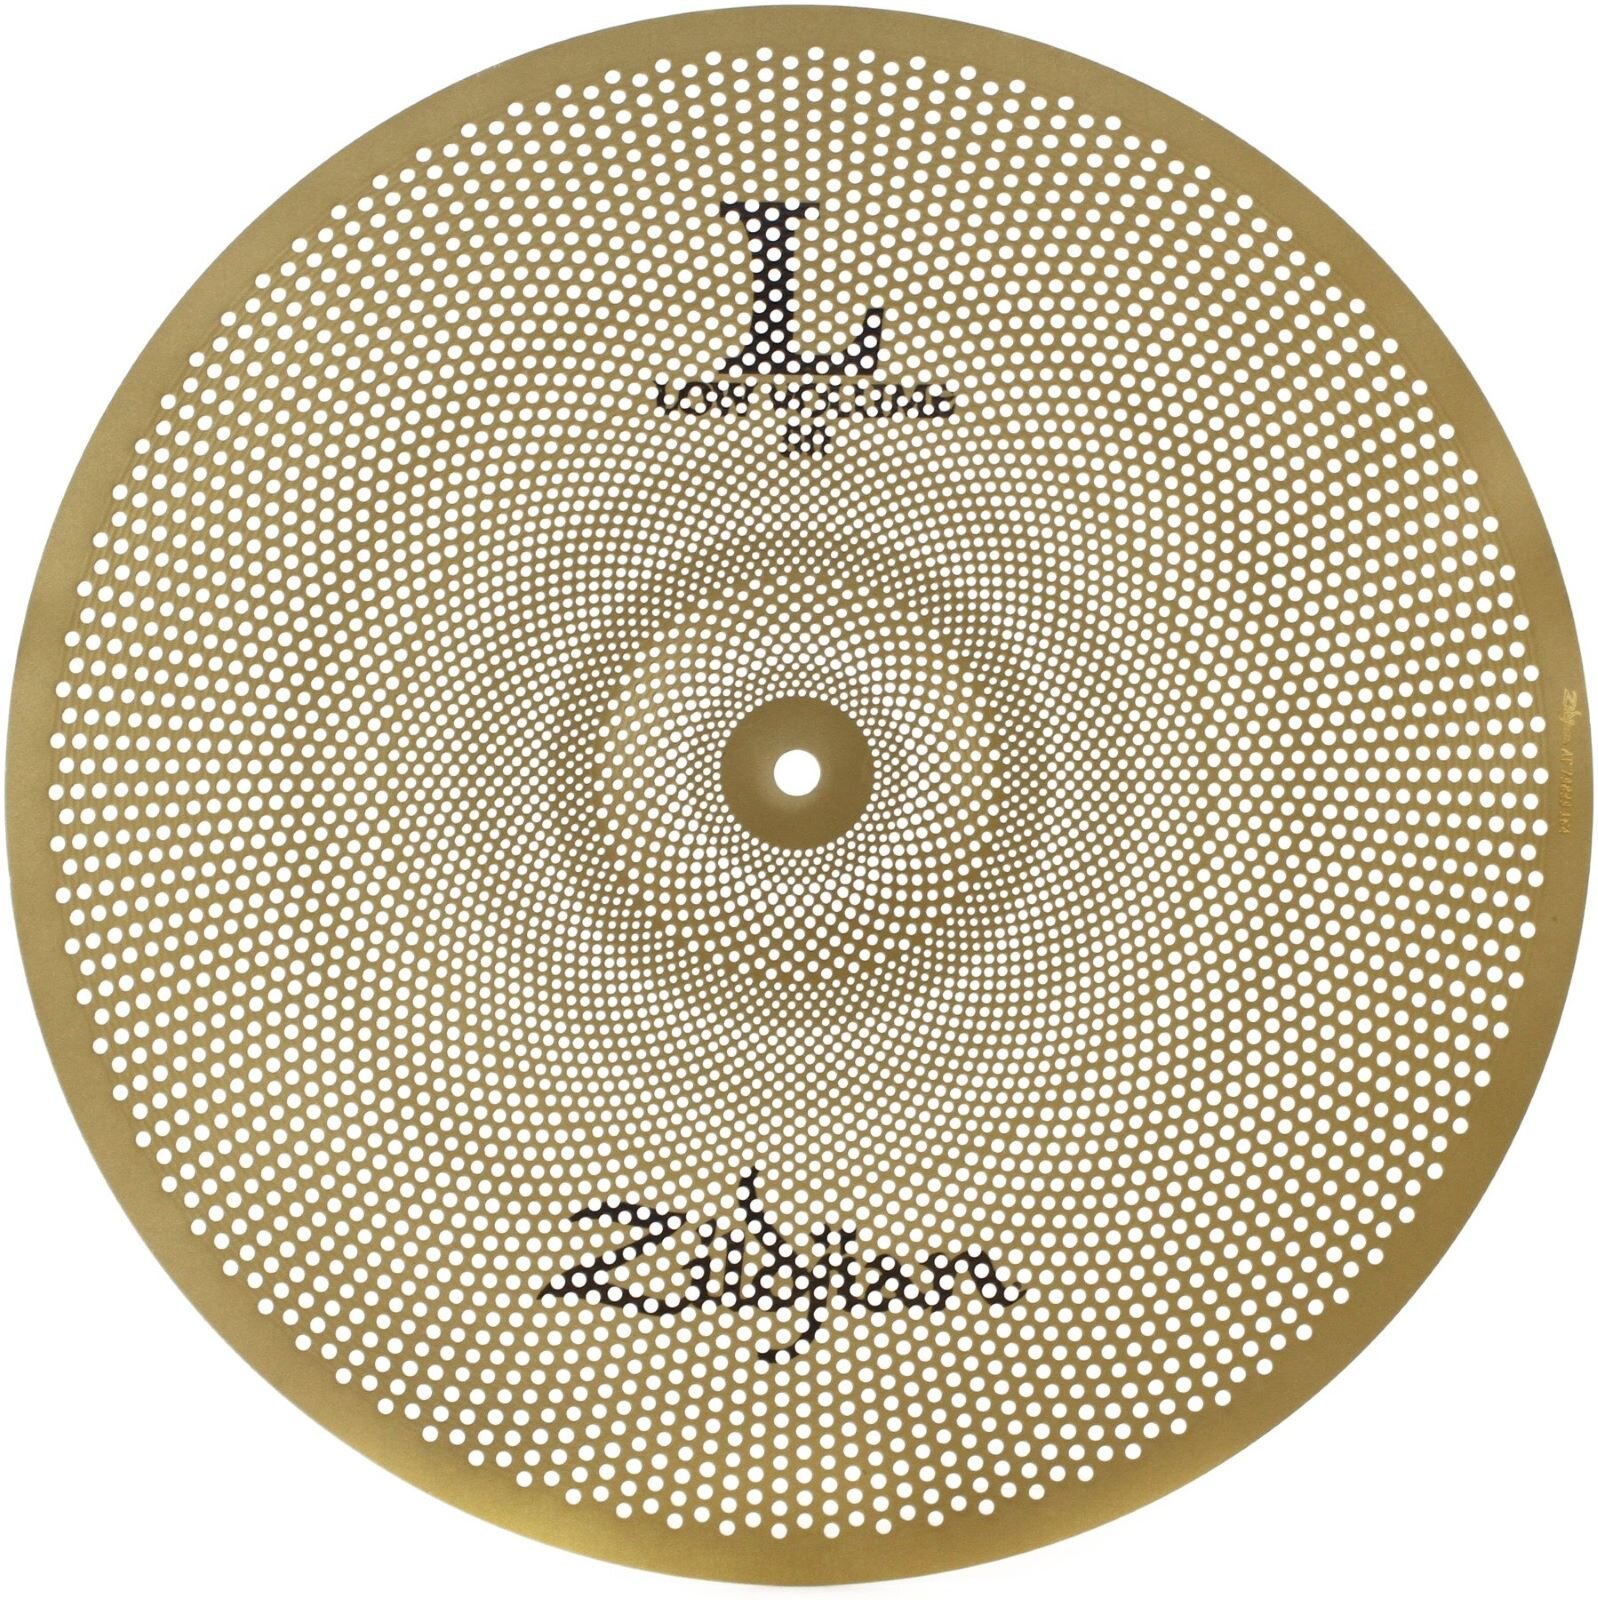 Zildjian L80 Low Volume 18